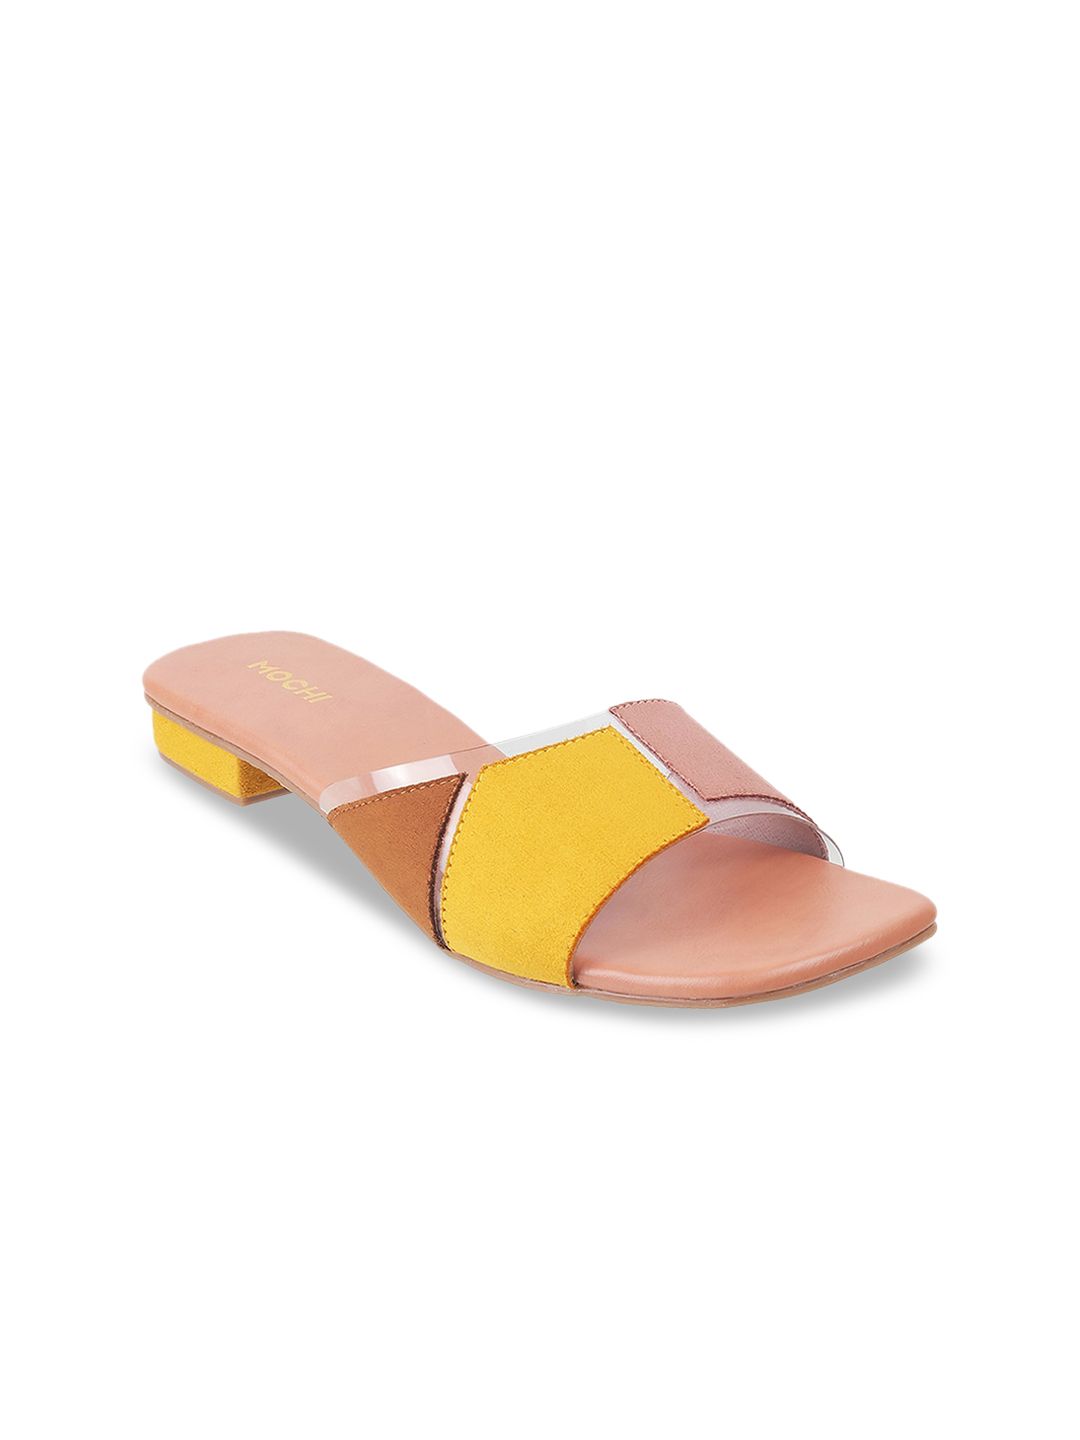 Mochi Women Peach-Coloured & Yellow Colourblocked Open Toe Flats Price in India